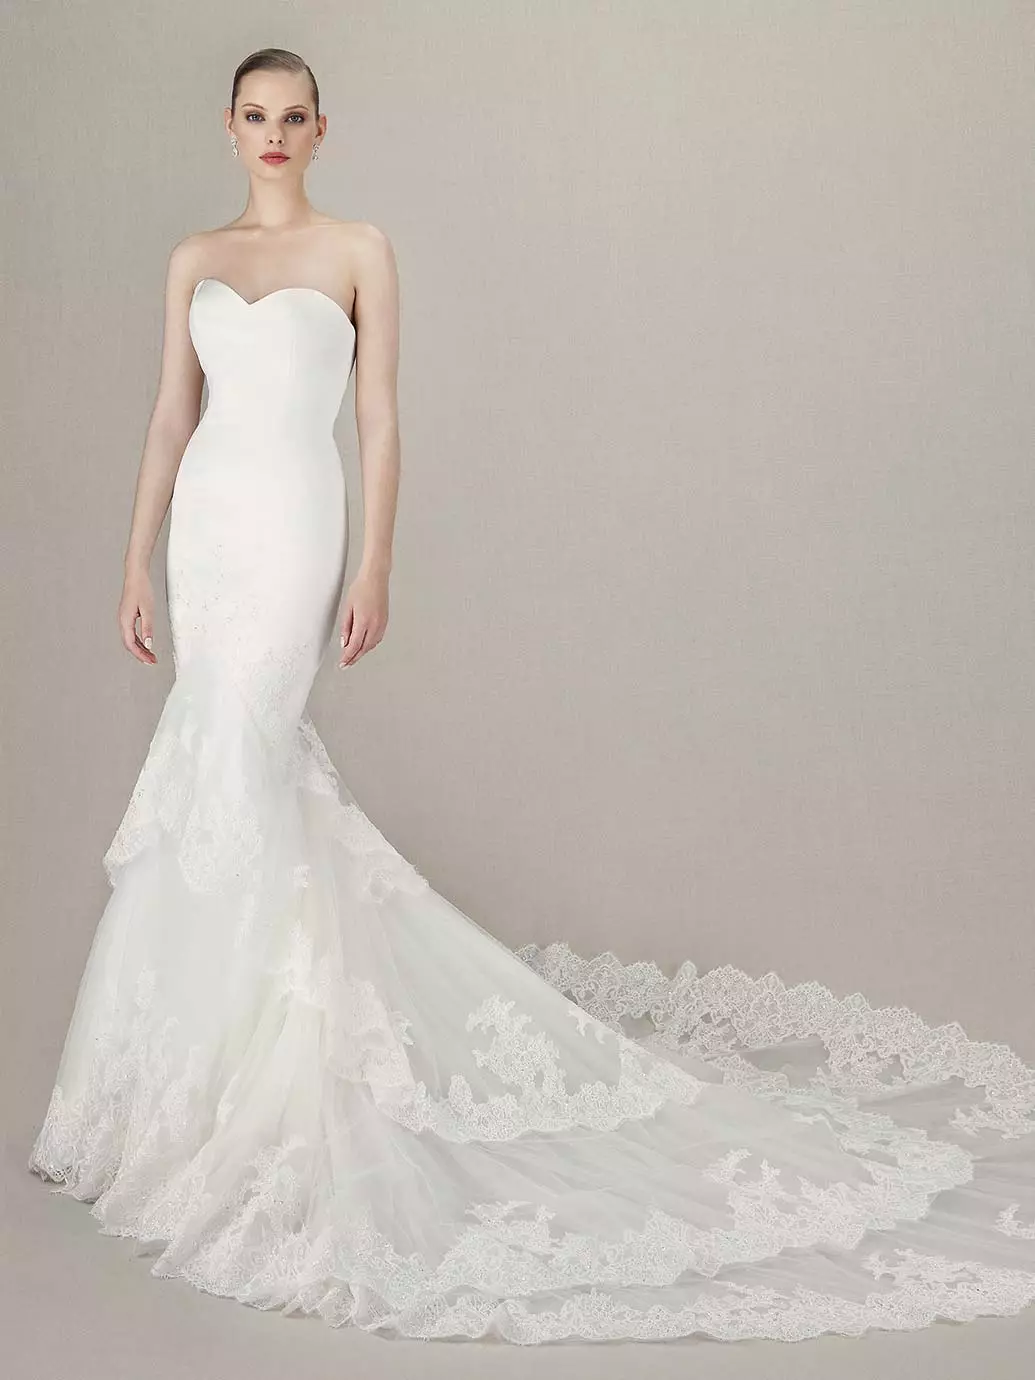 White Wedding Dress Mermaid.